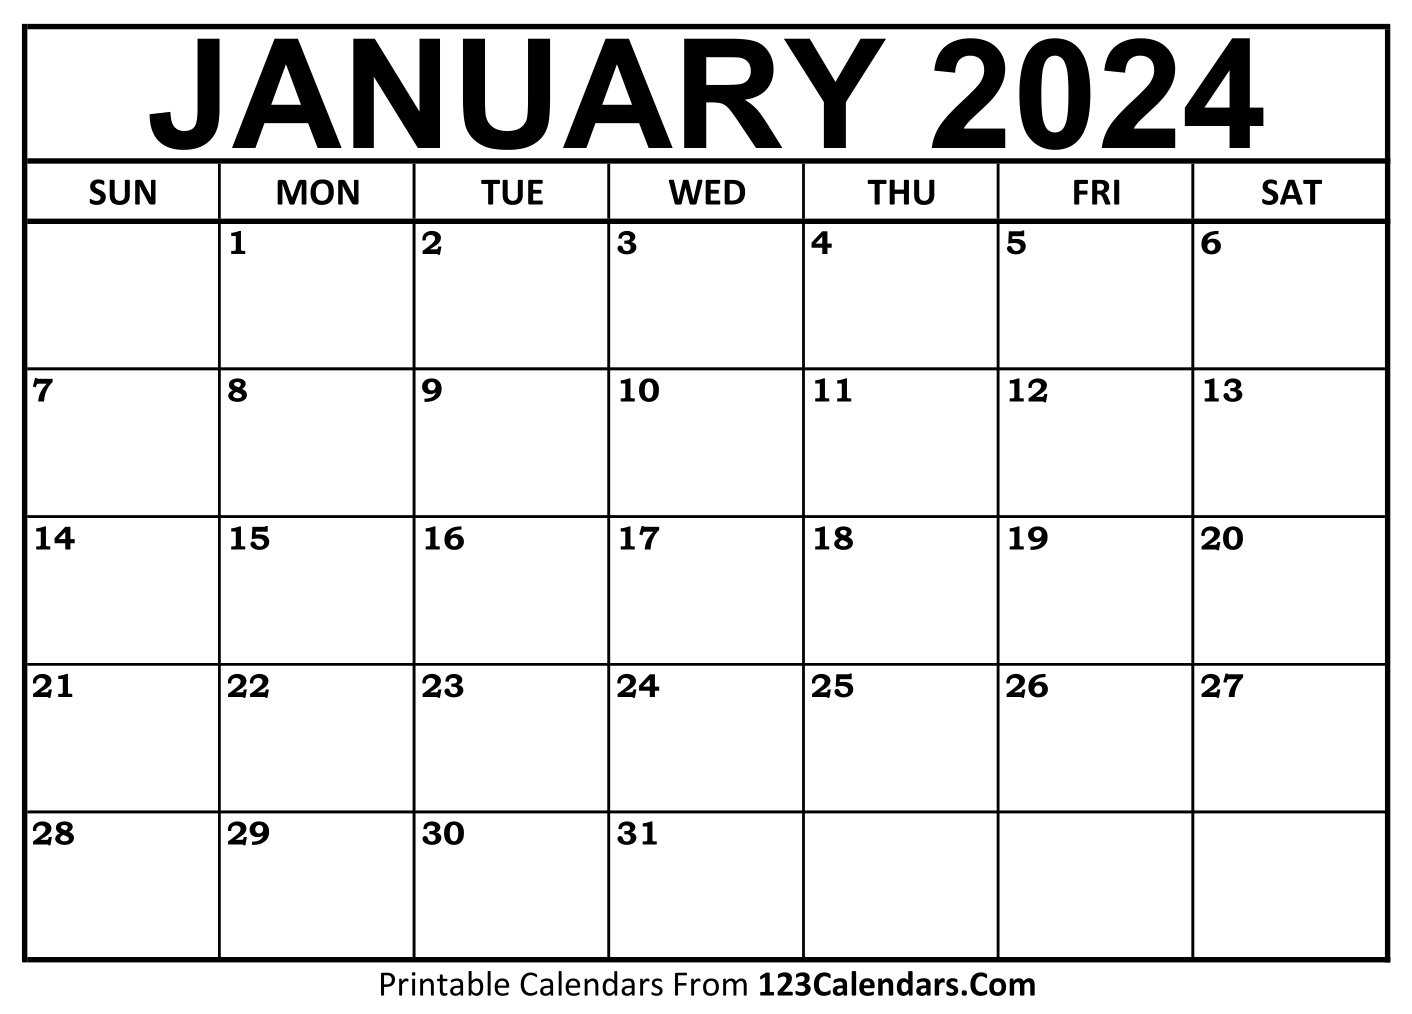 Printable January 2024 Calendar Templates - 123Calendars | Free Printable Monthly Calendar 2024